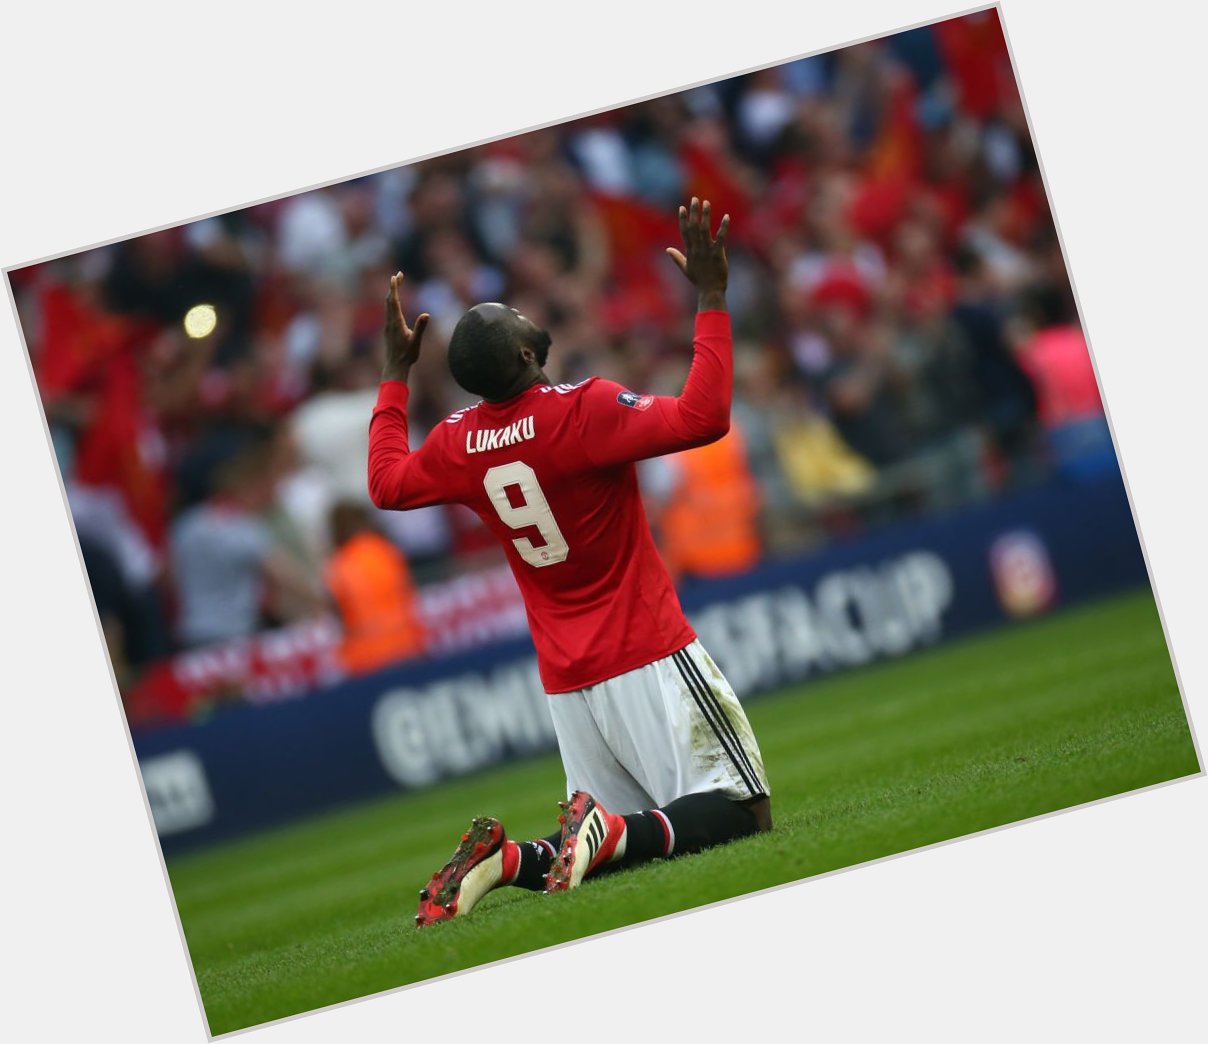 Happy 25th Birthday Romelu Lukaku! The striker already has 101 Premier League goals to his name 